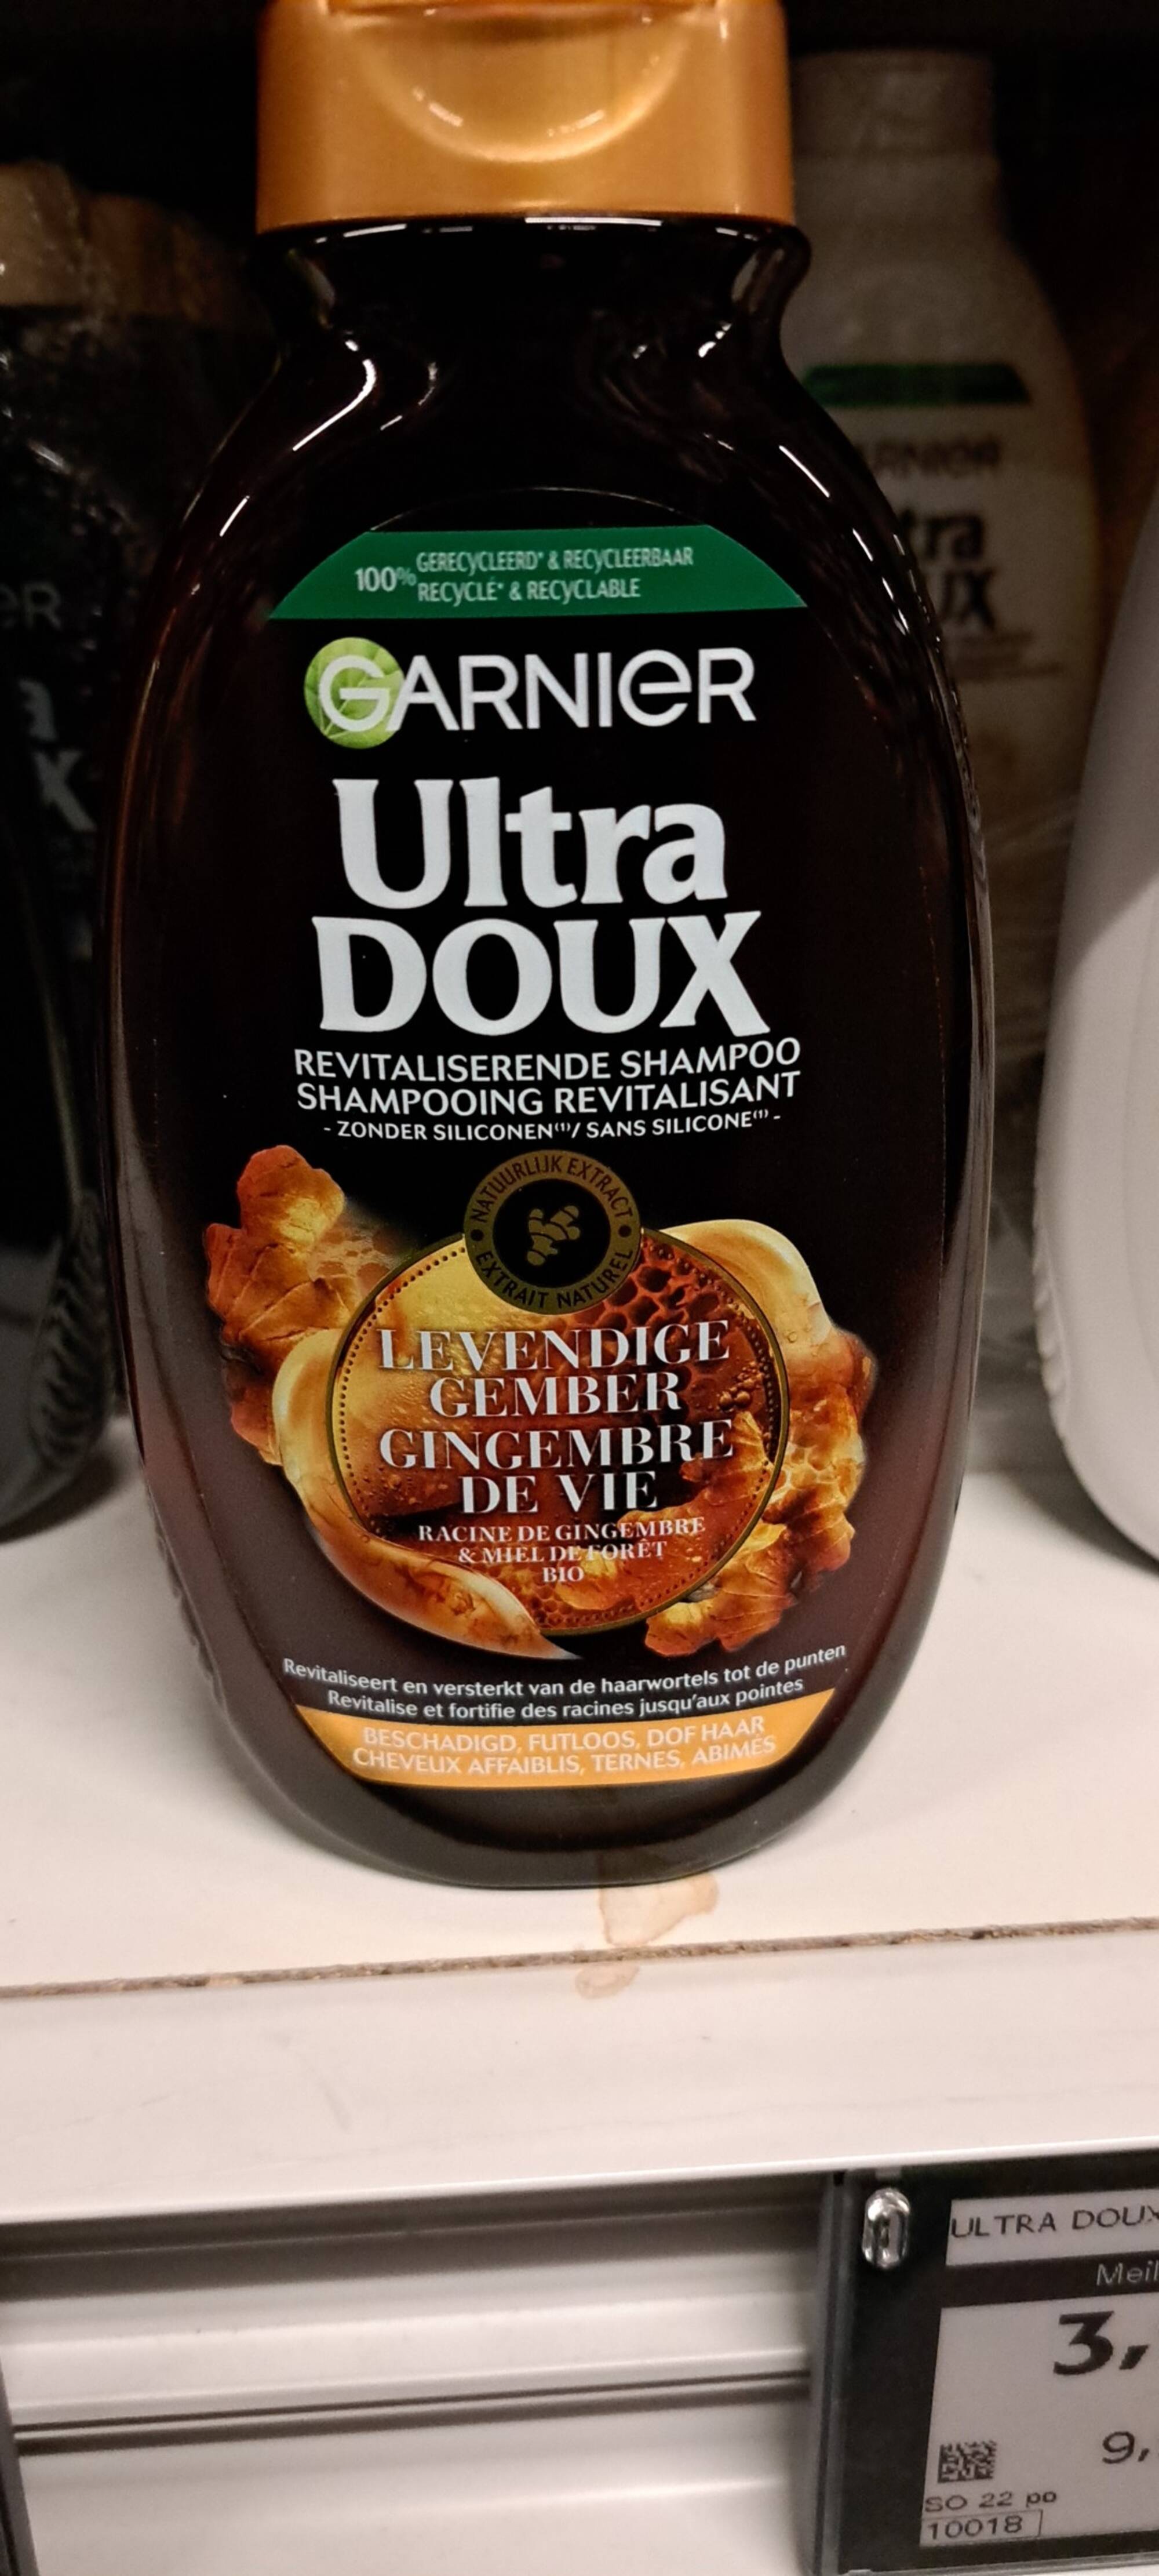 GARNIER - Ultra doux Gingembre de vie - Shampooing revitalisant